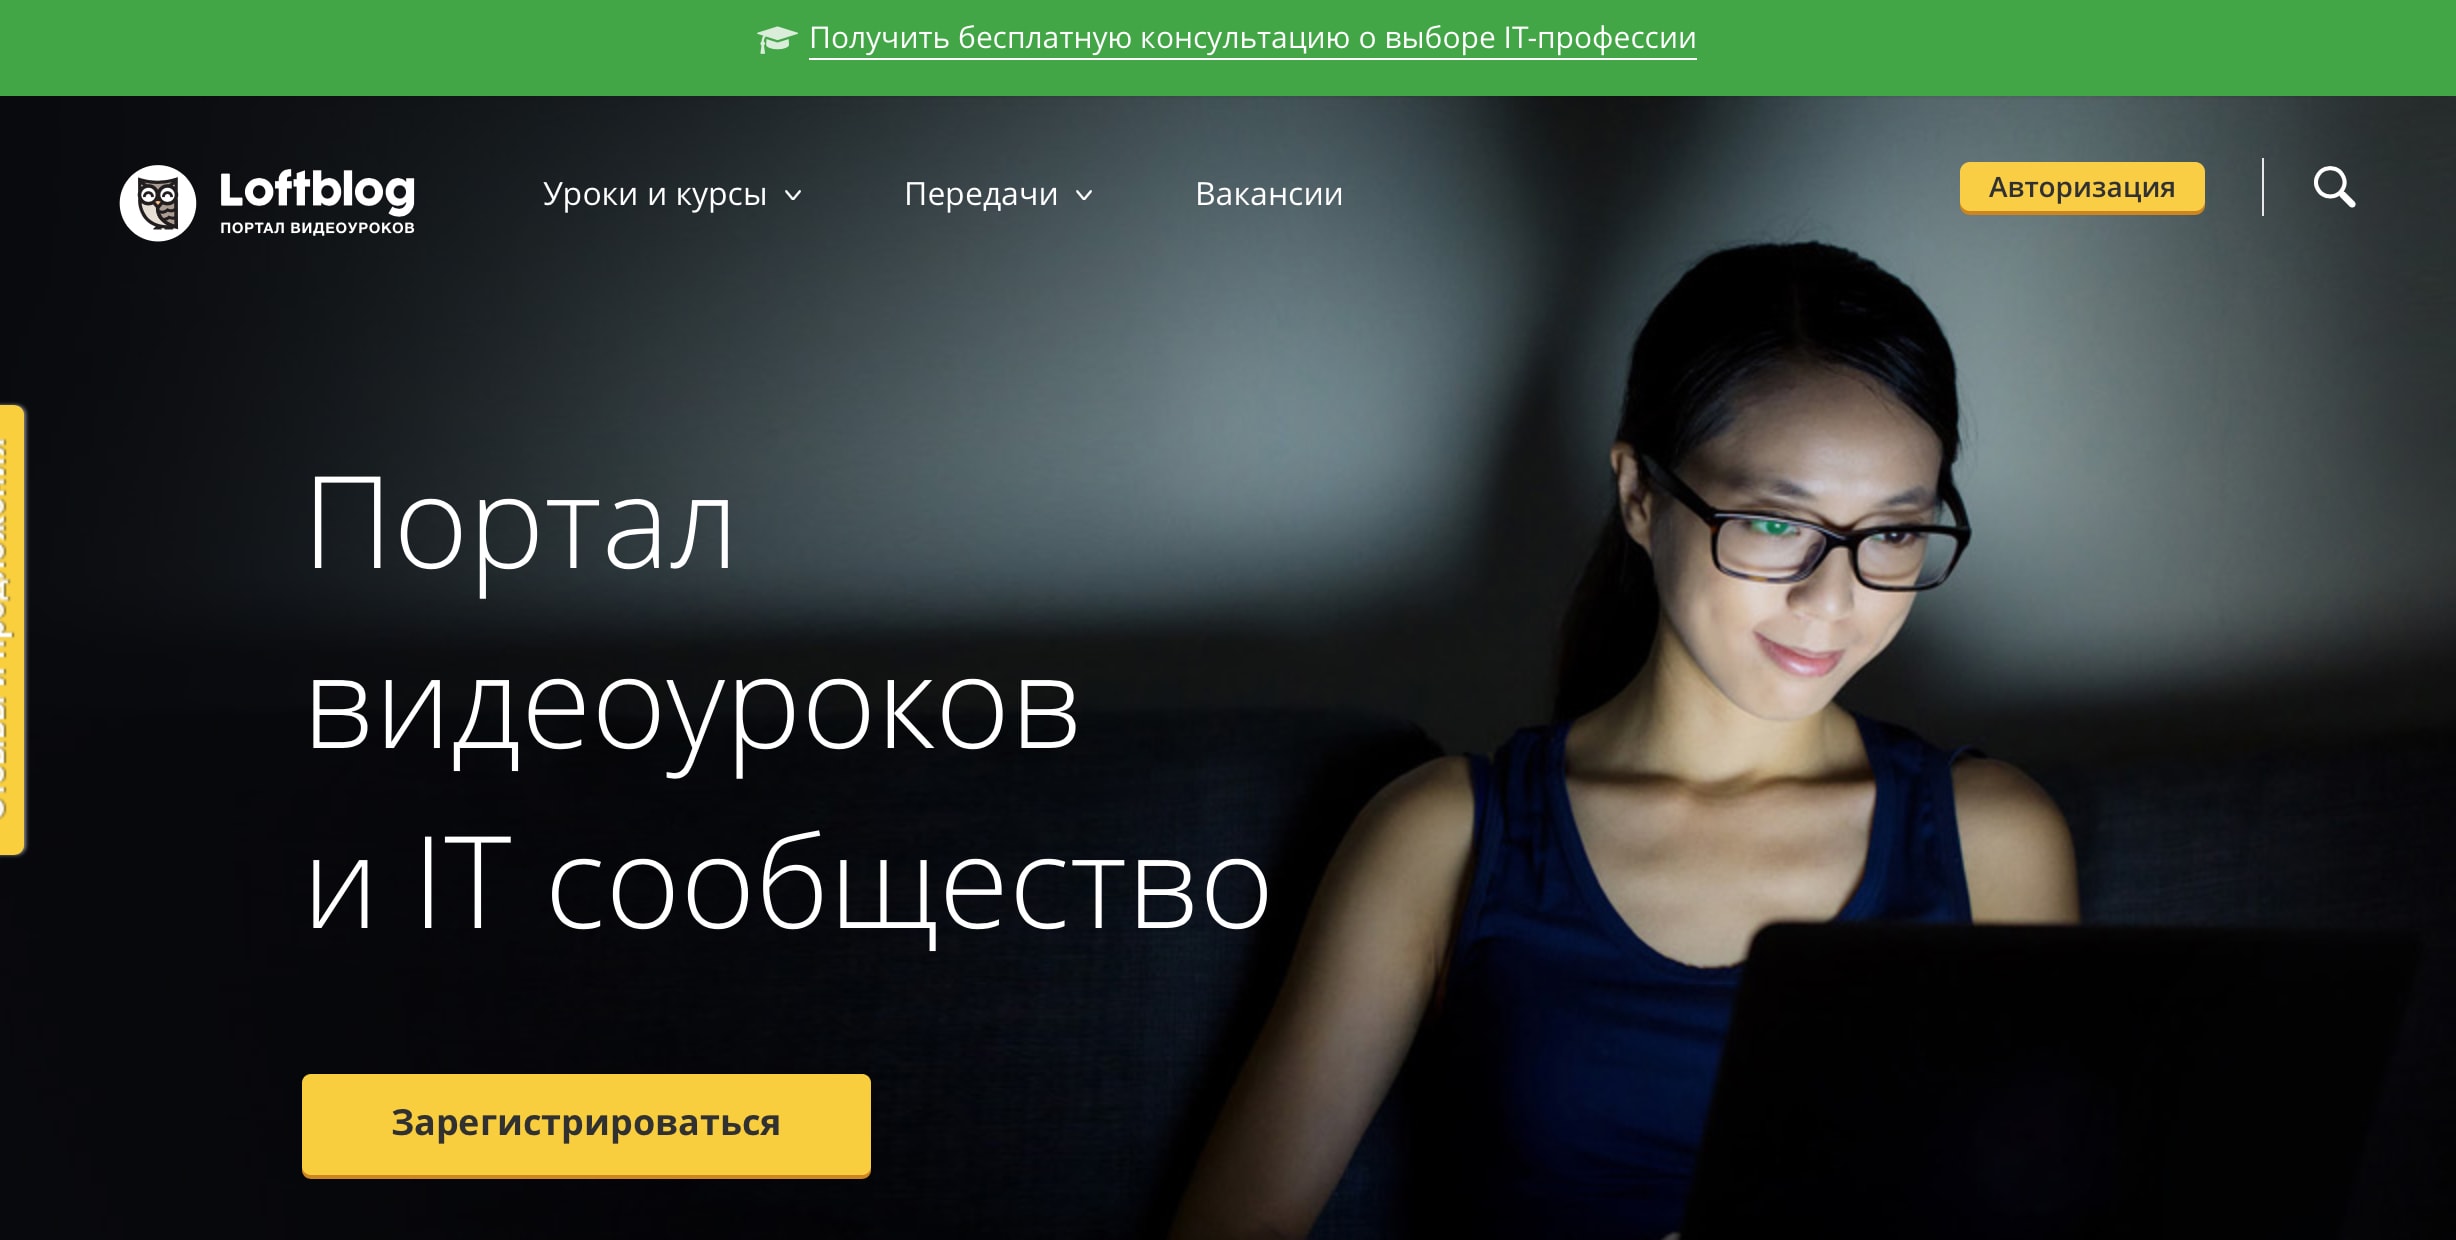 LoftBlog.ru, скриншот интерфейса 1